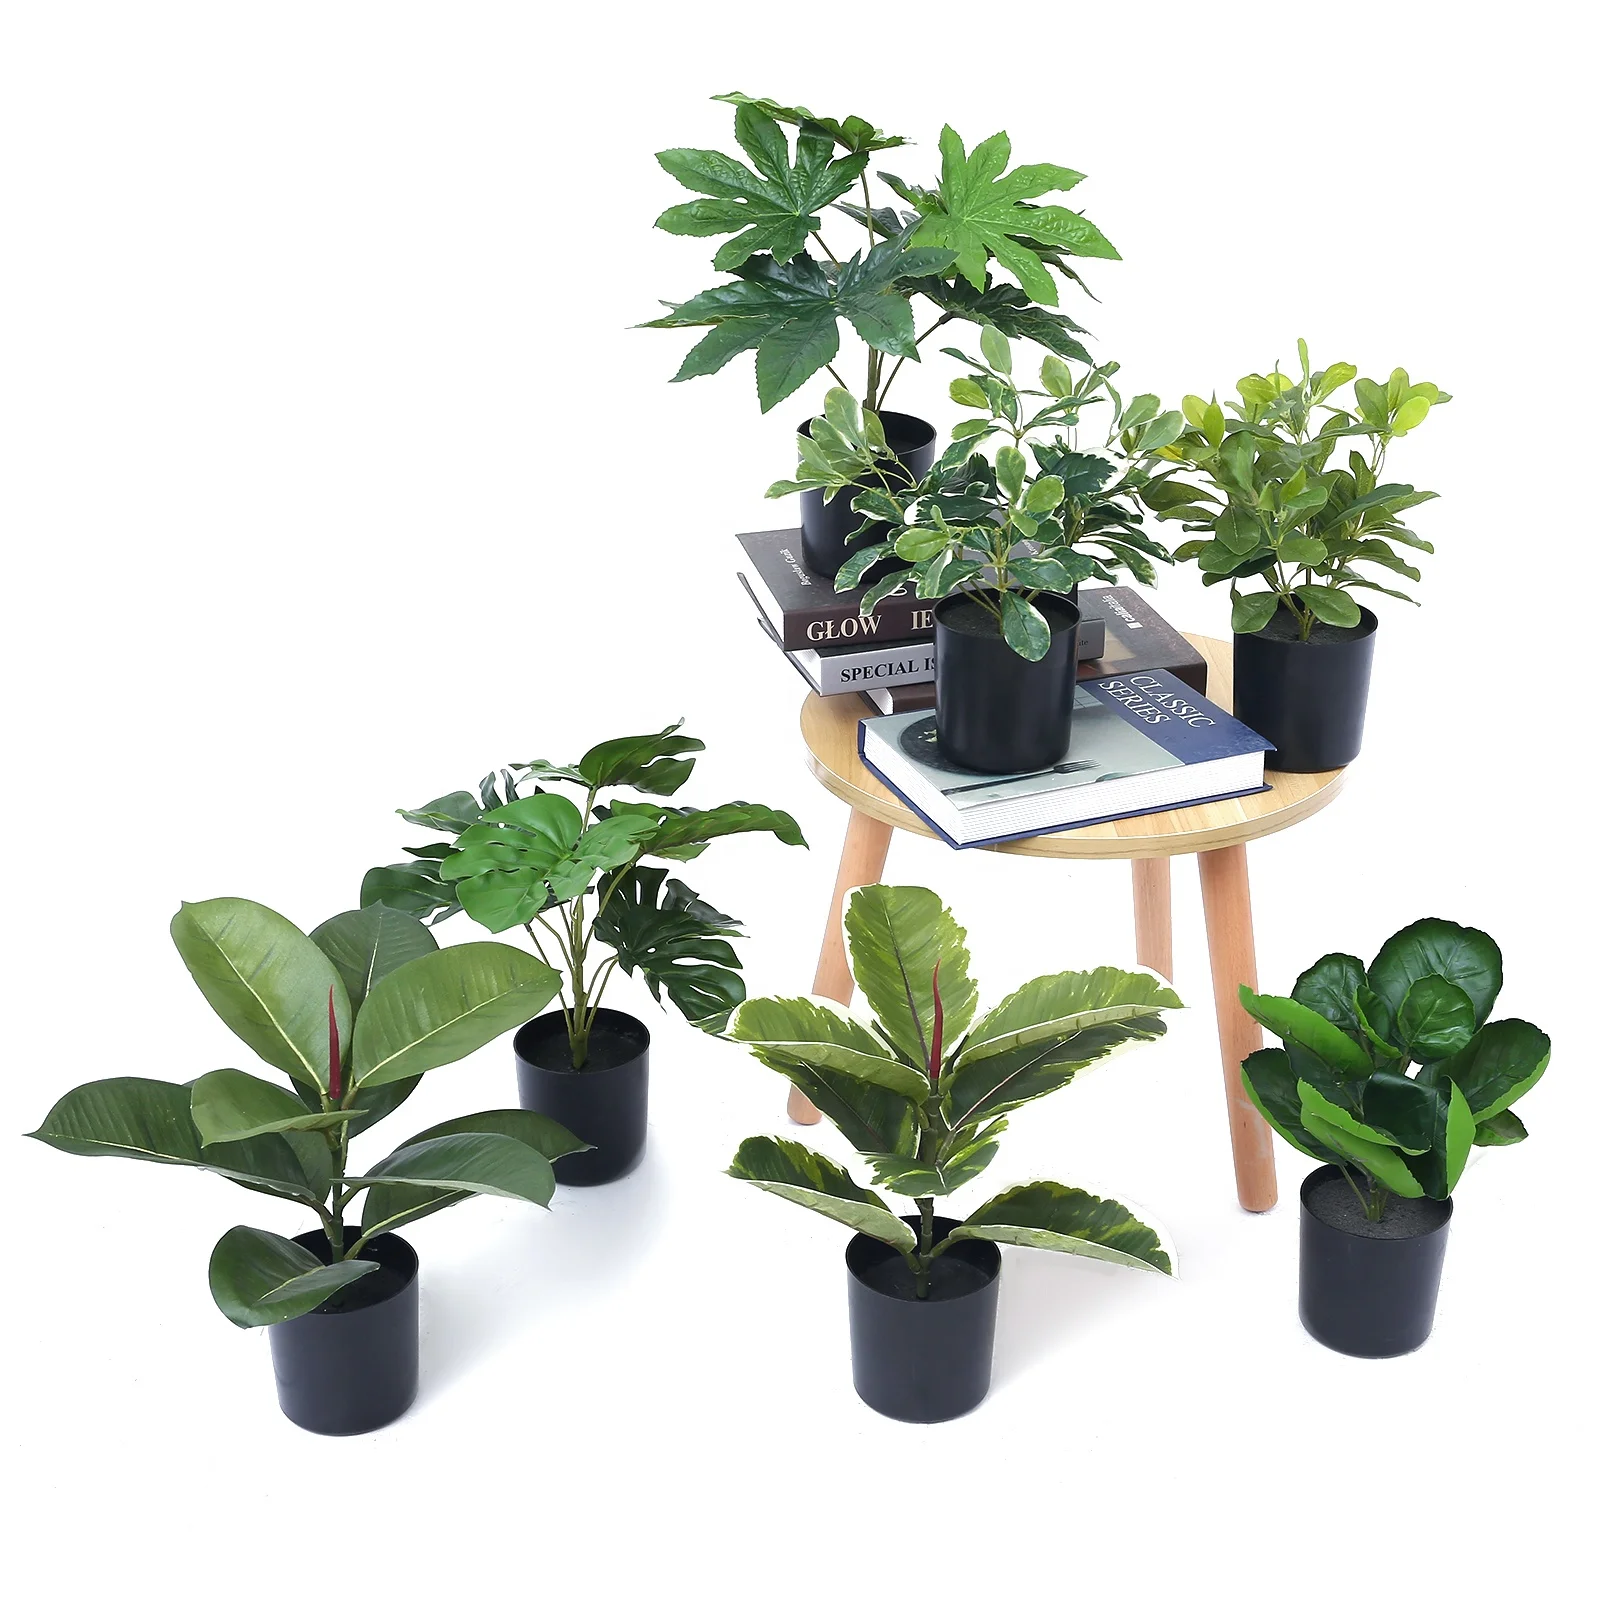 

Faux Plastic Artificial Plant Mini 30cm Artificial Potted Bonsai Tree for Home Office Decor, Shown